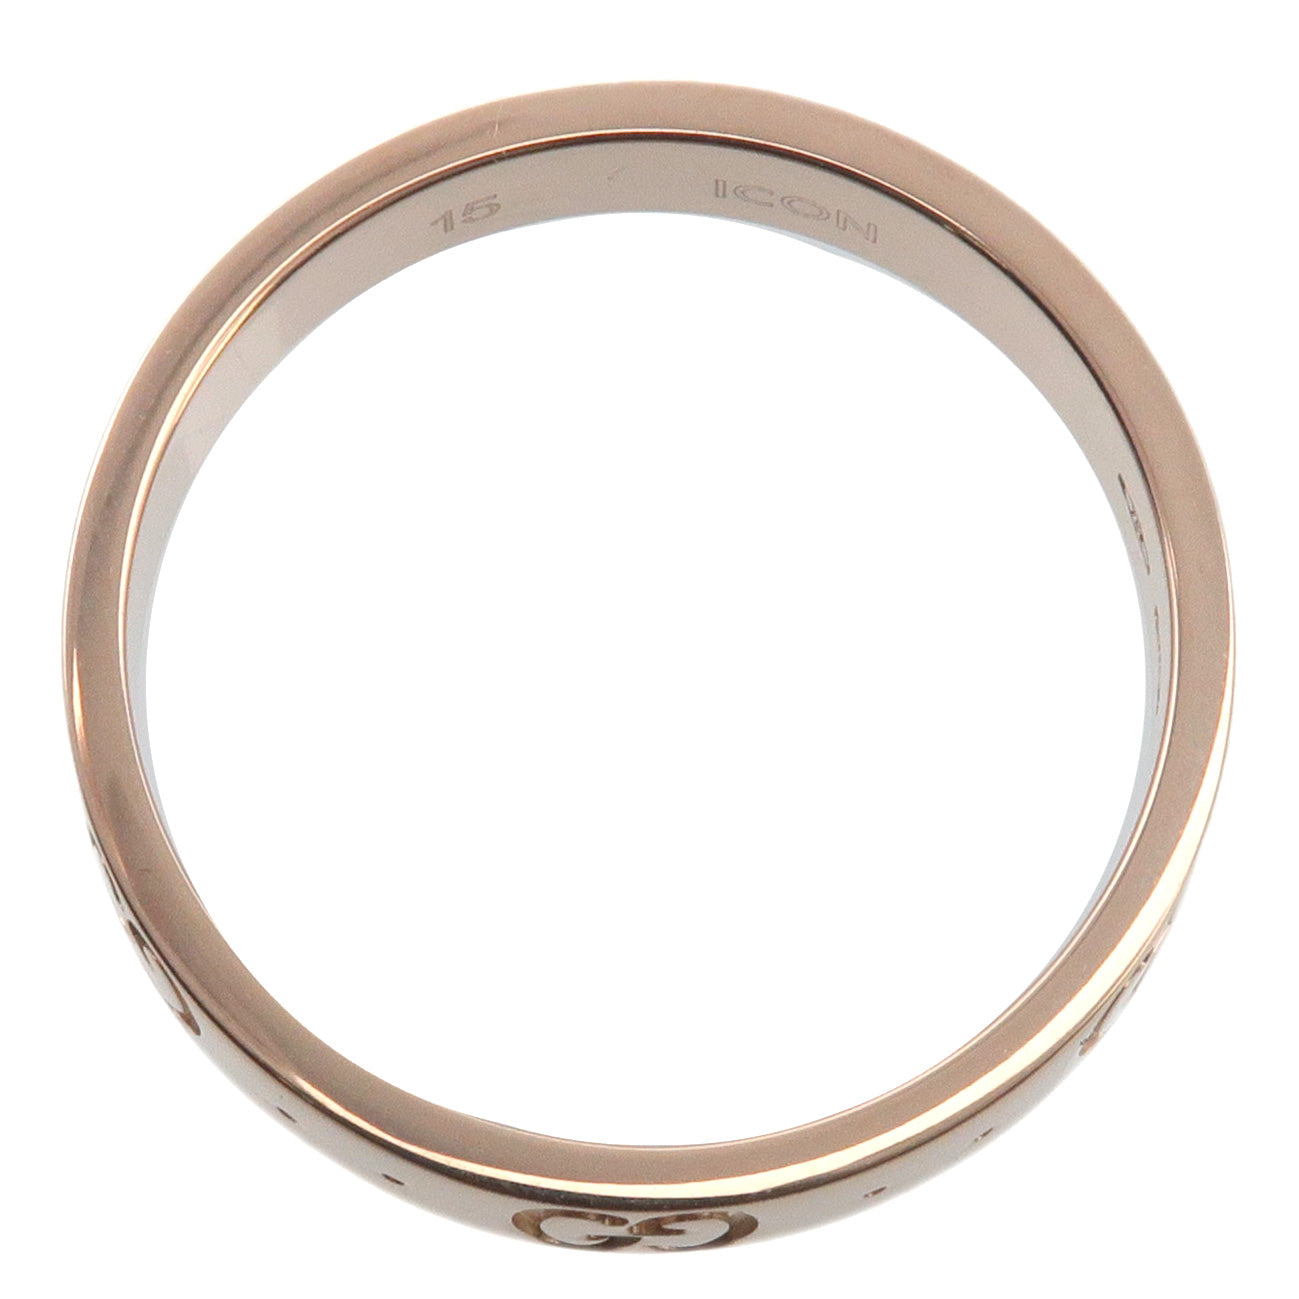 GUCCI ICON Ring K18 PG 750 Rose Gold US7.0-7.5 EU55 HK16